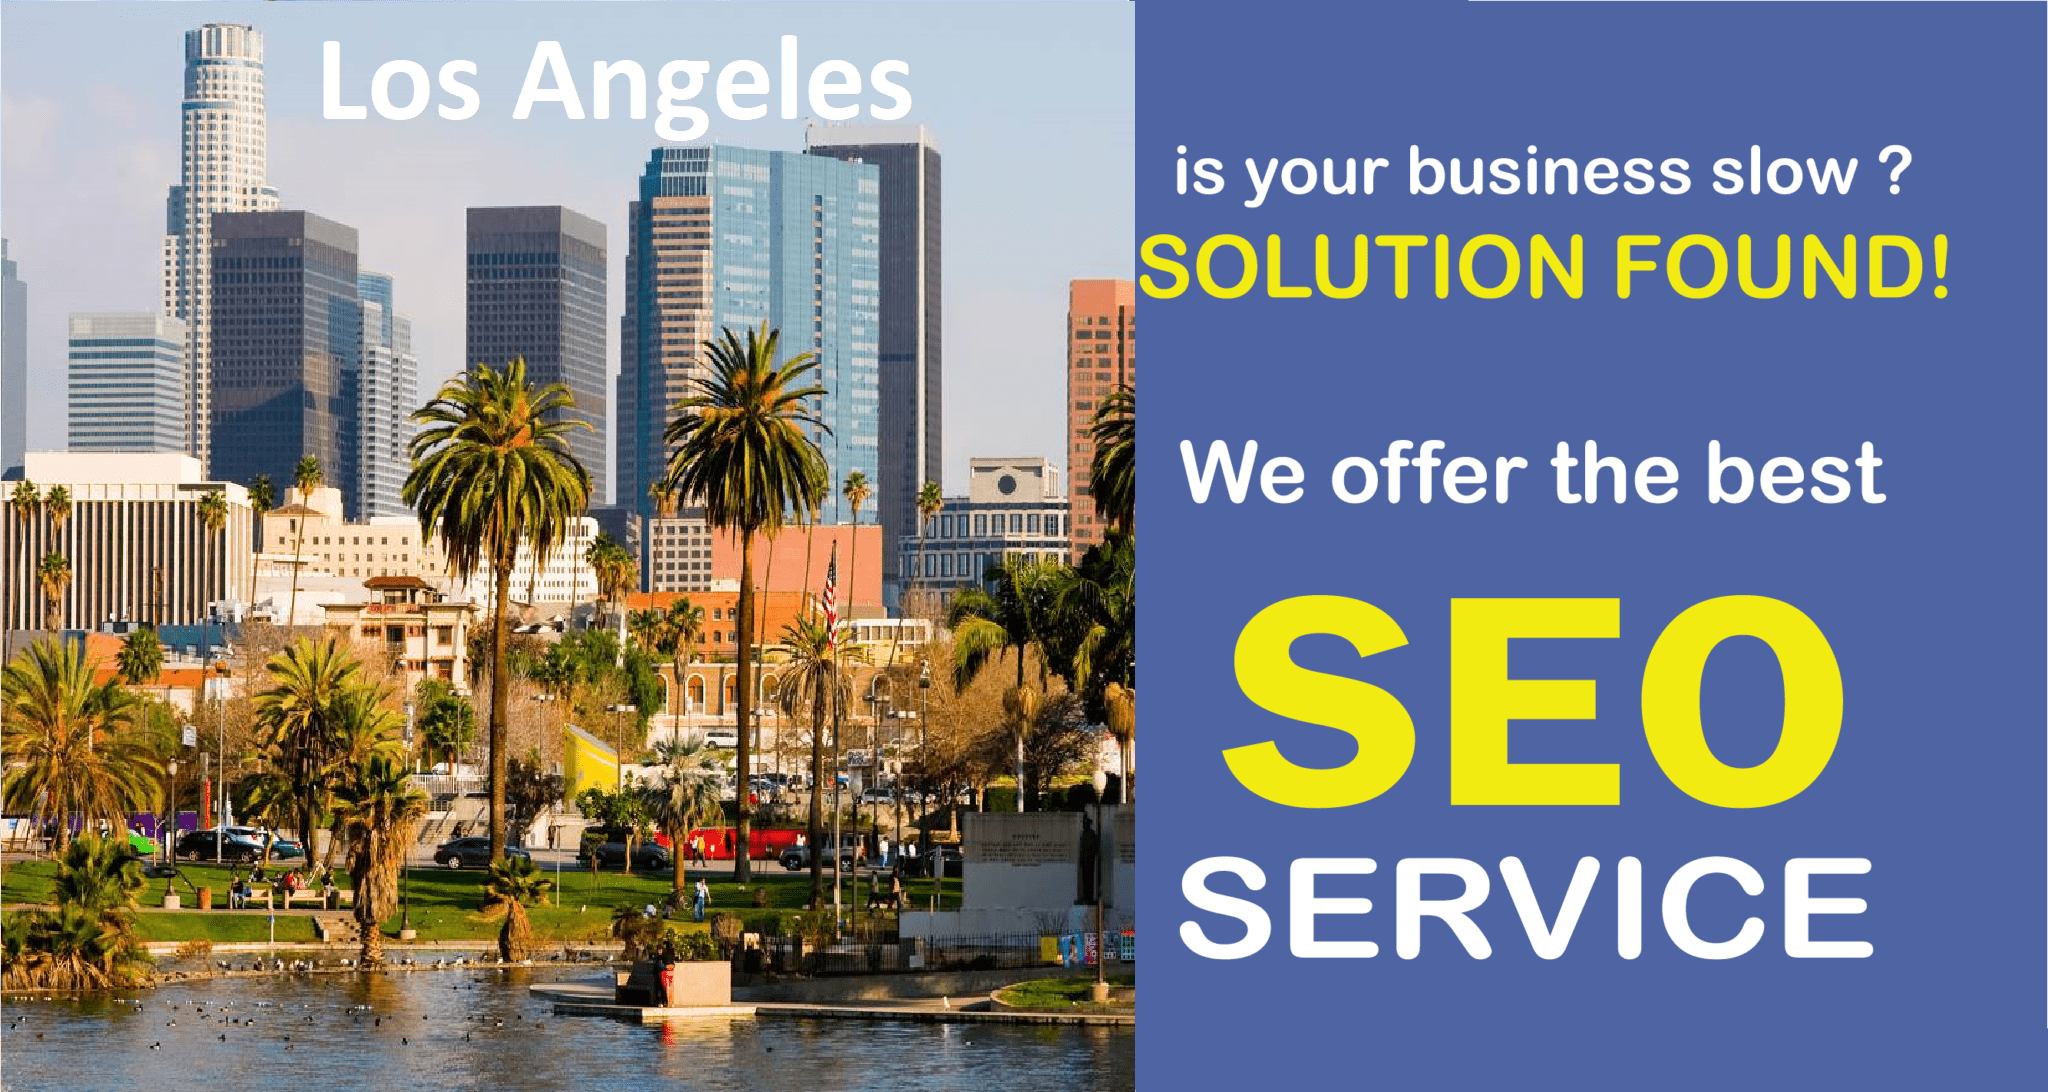 SEO Services California - Hire SEO Company for California Business